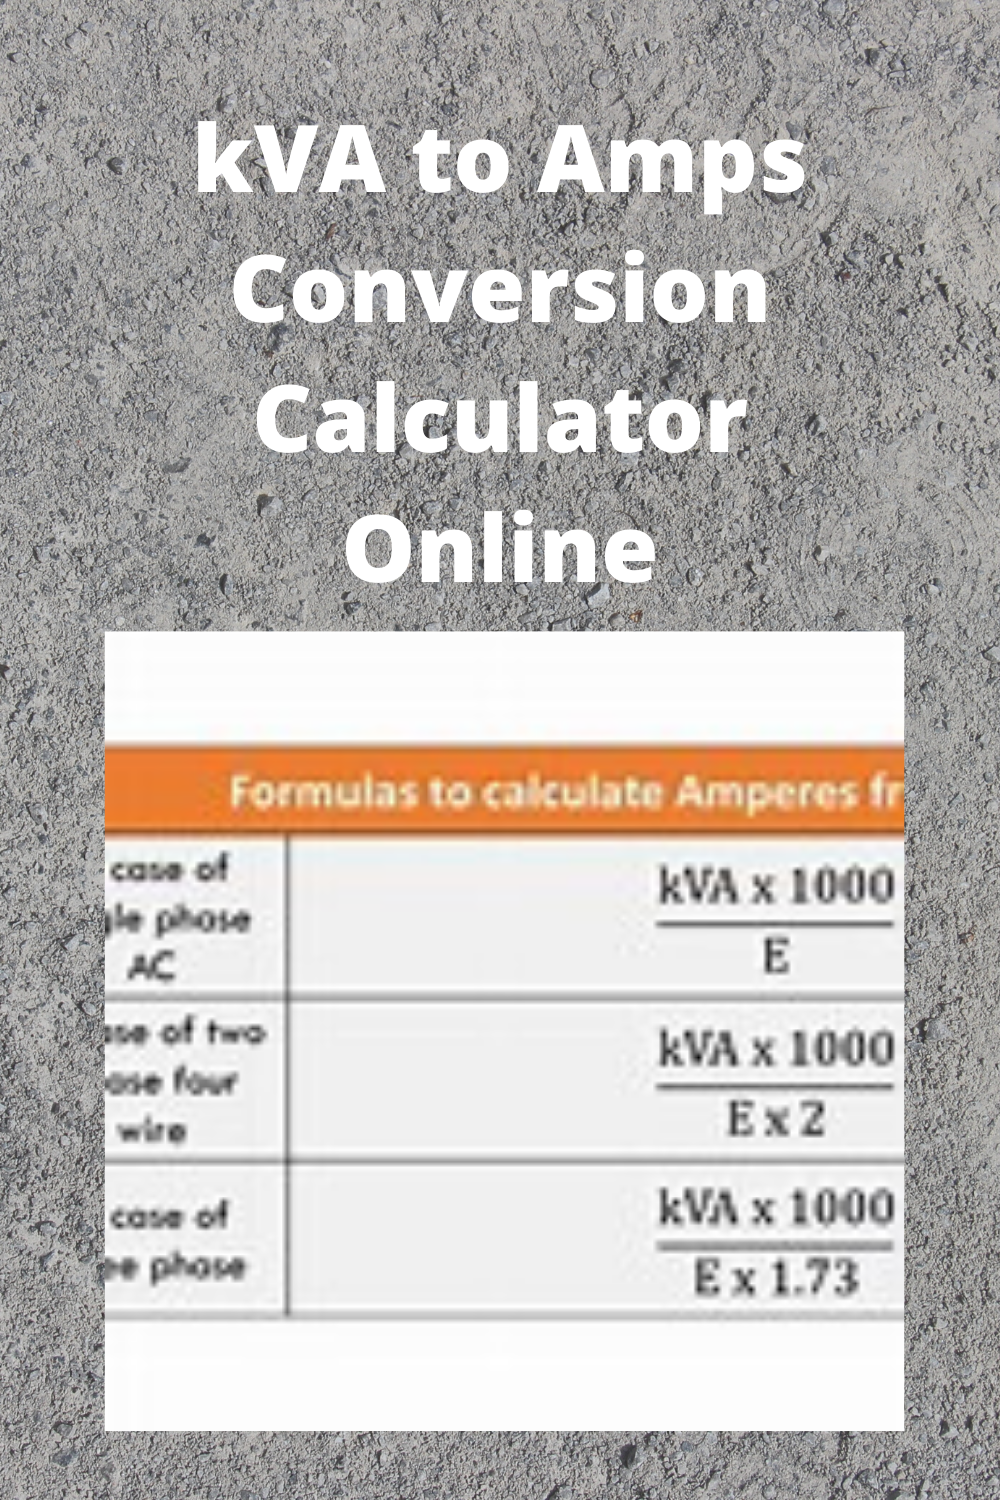 kva-to-amps-conversion-calculator-online-easy-rapid-calcs